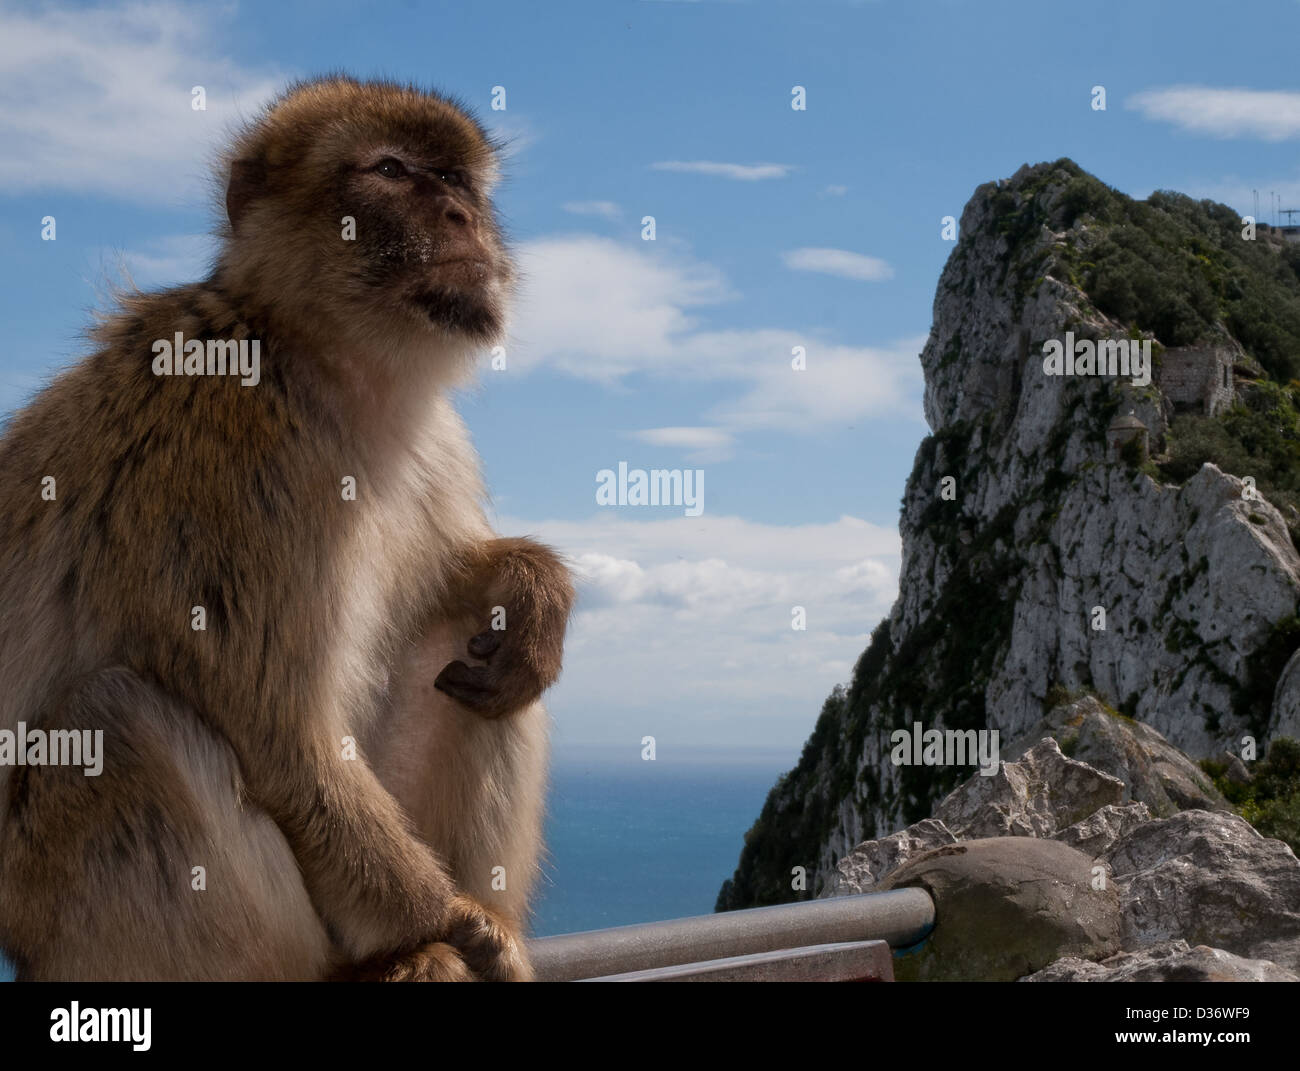 Gibraltar monkey with the mountain on the background Stock Photo